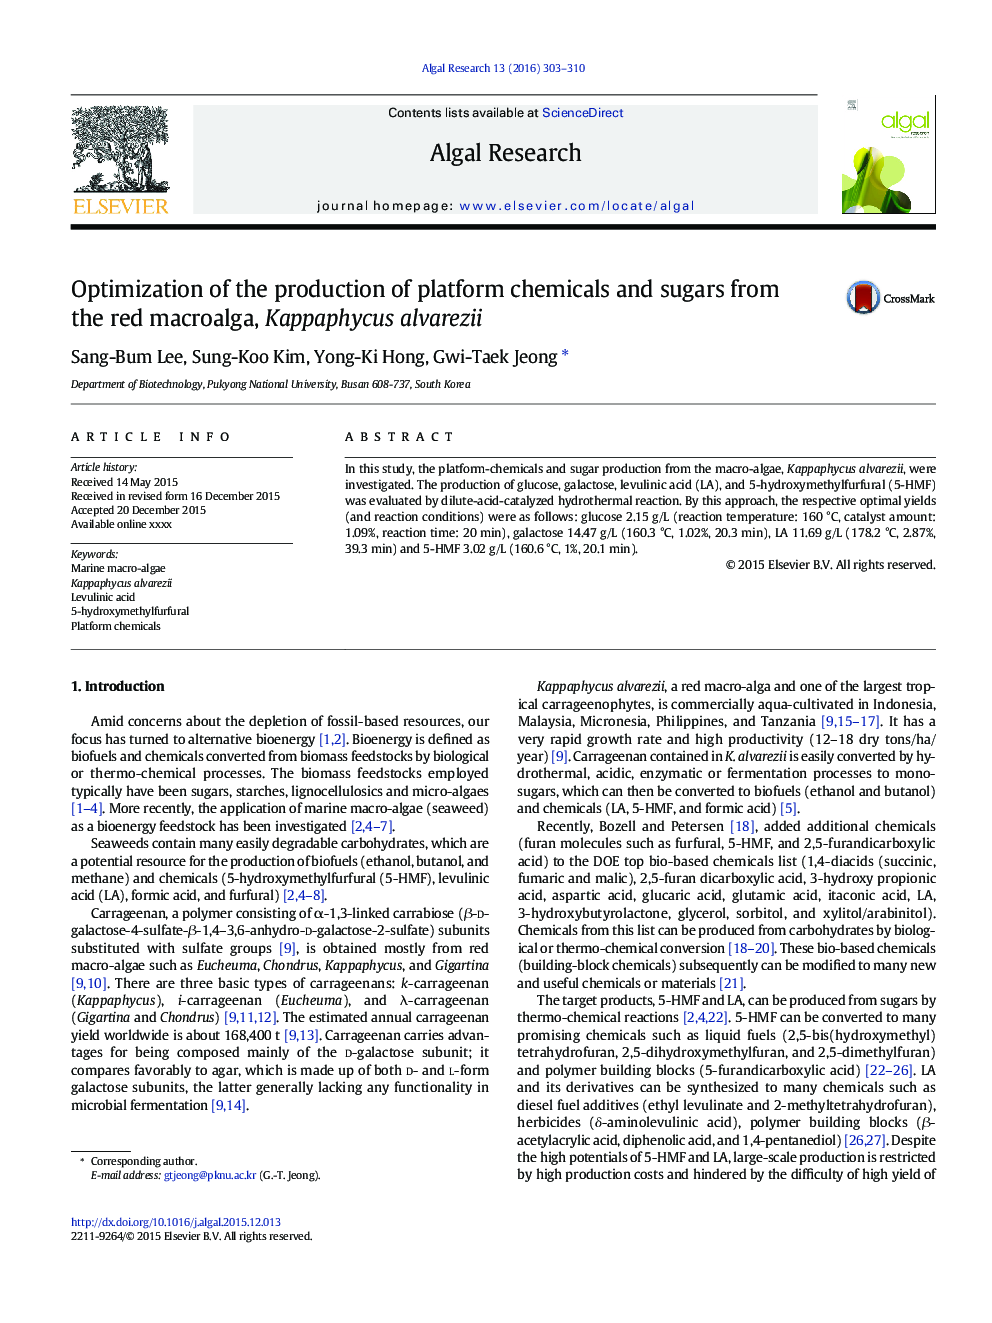 Optimization of the production of platform chemicals and sugars from the red macroalga, Kappaphycus alvarezii